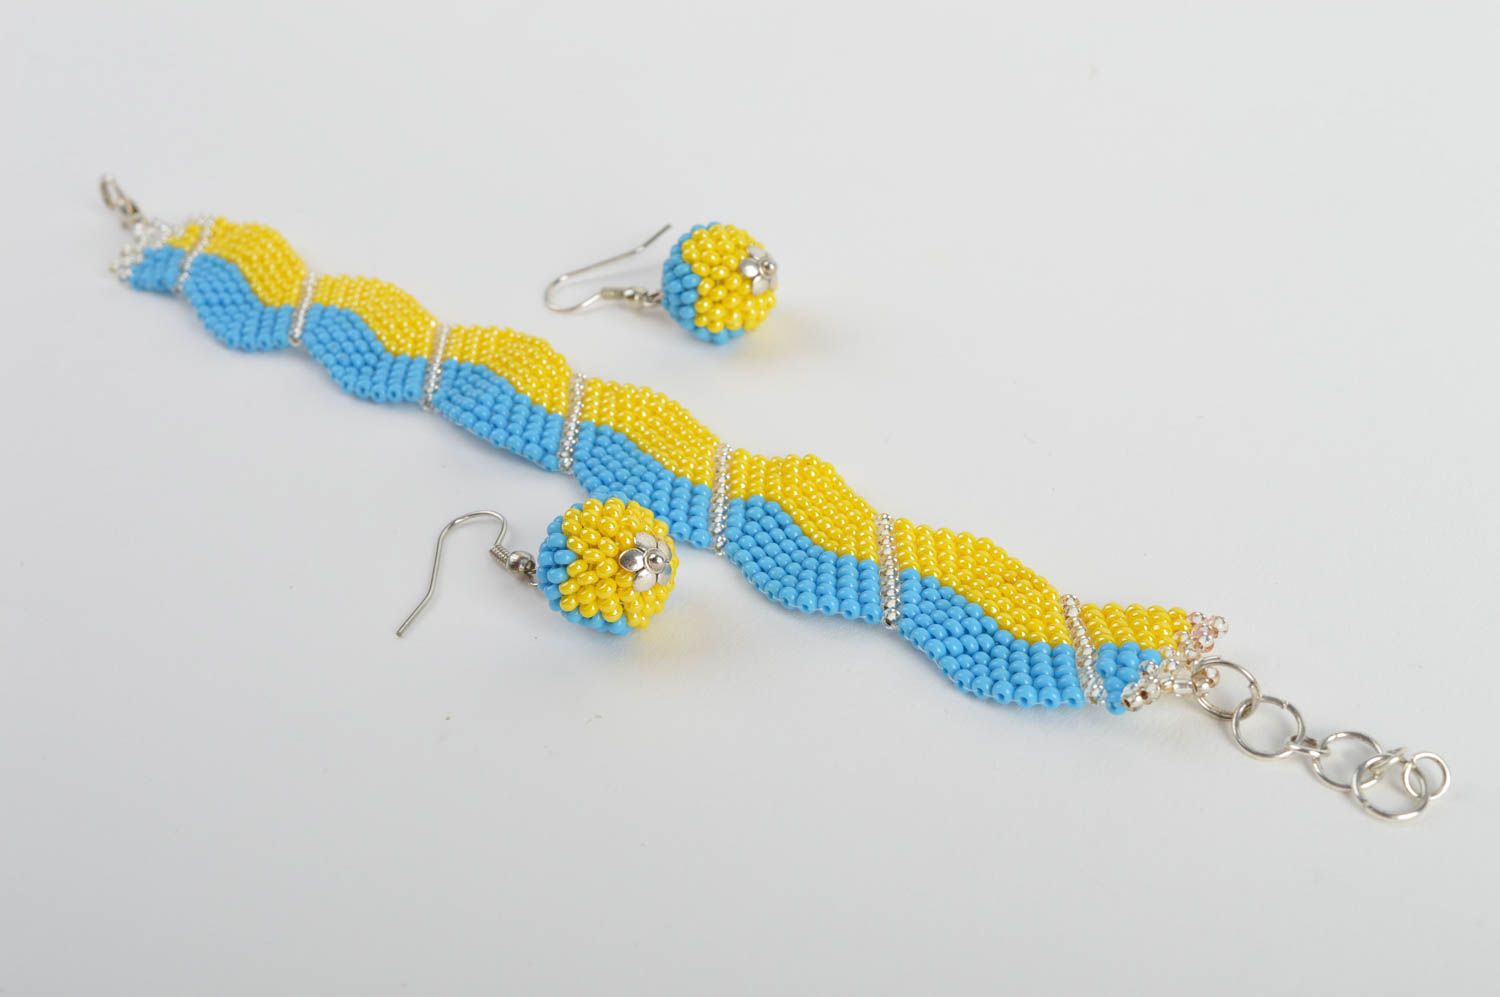 Handmade yellow and blue beaded jewelry set 2 items wrist bracelet and earrings photo 3